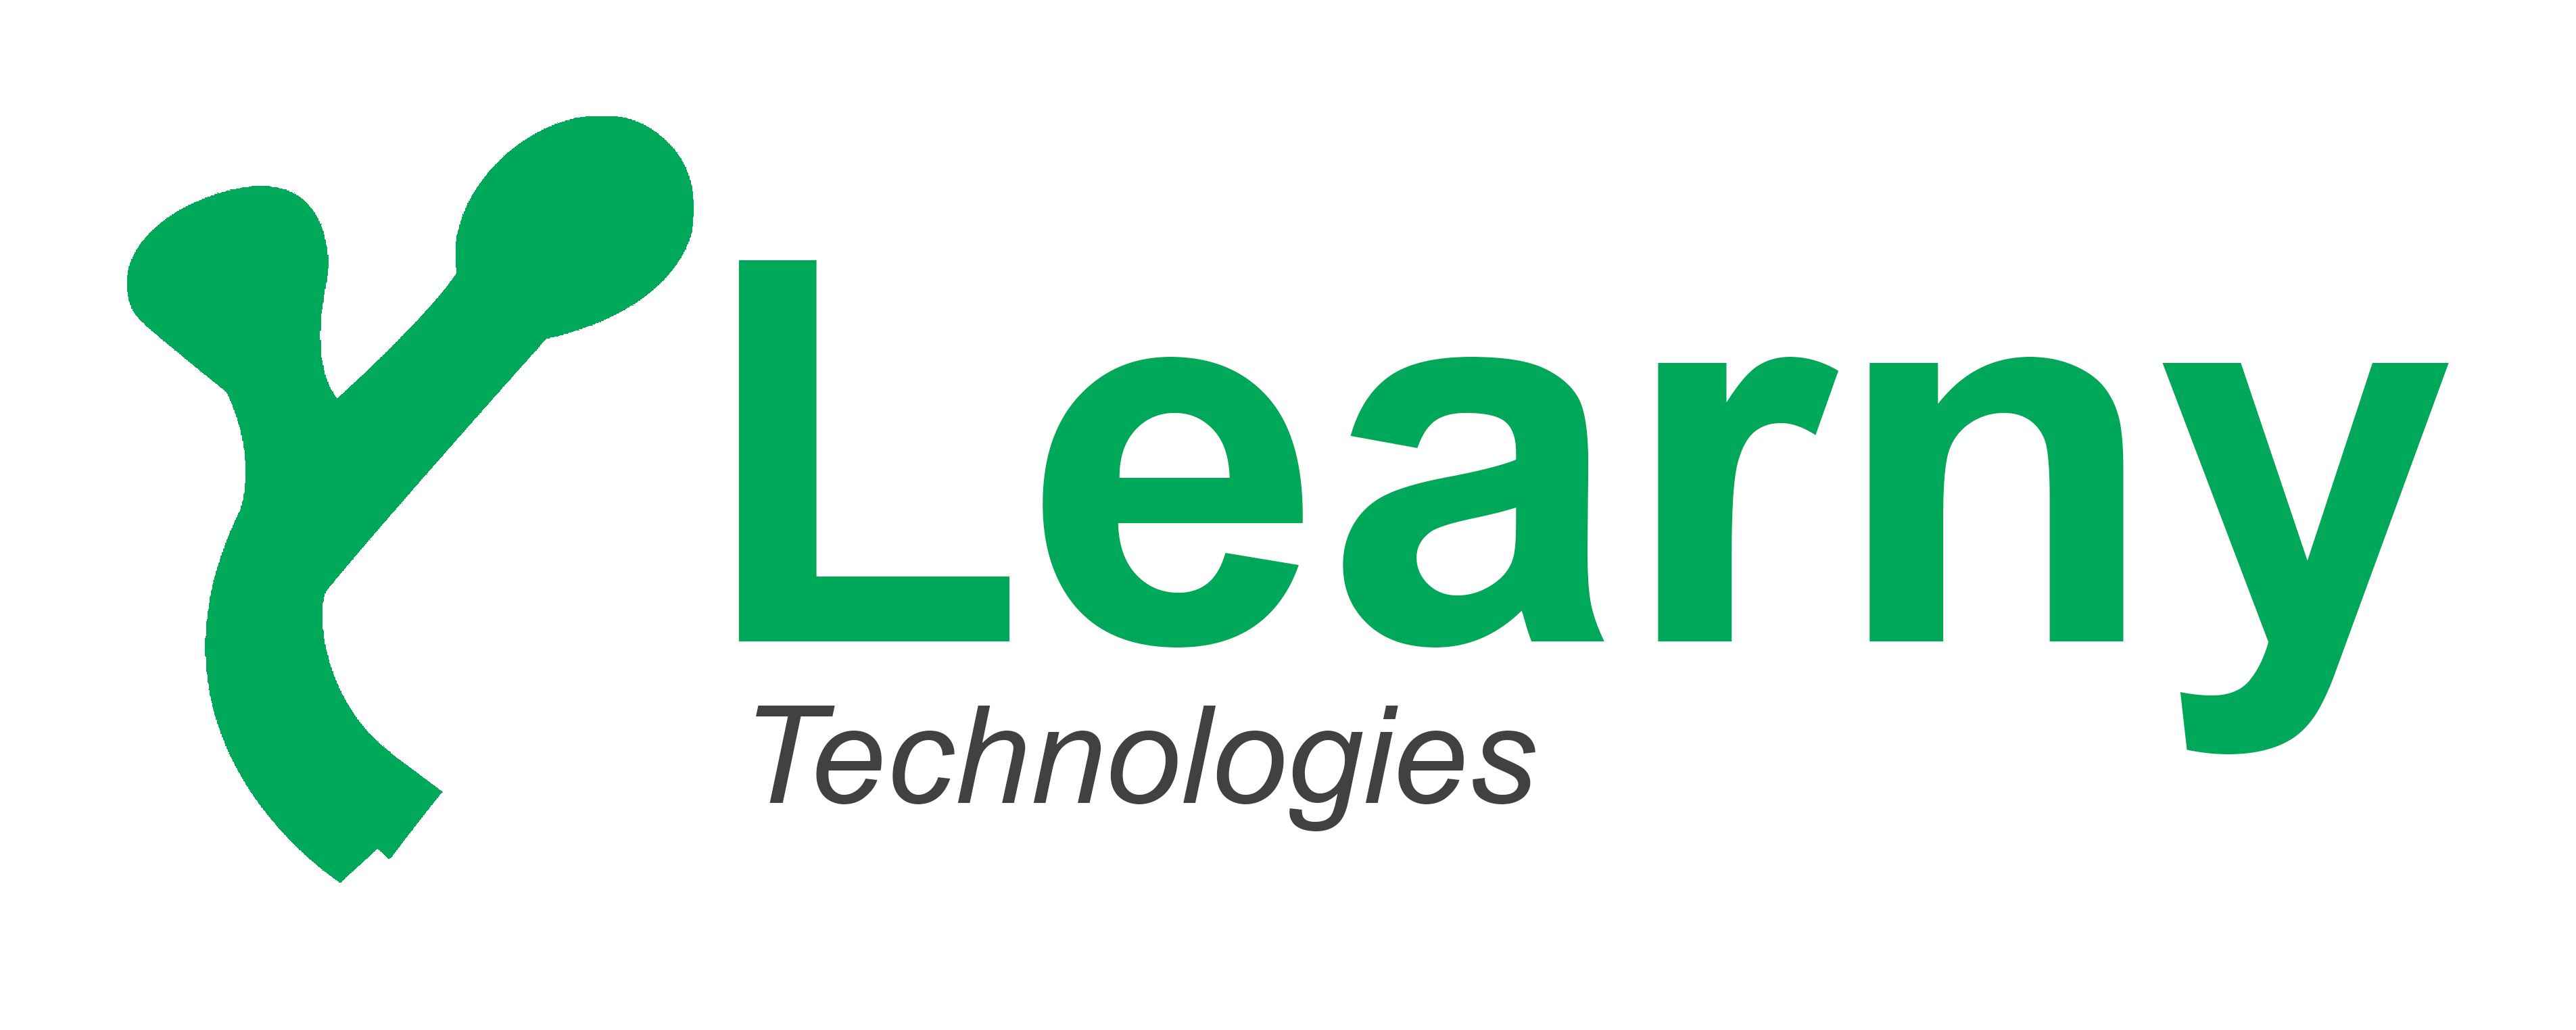 Learny Technologies logo